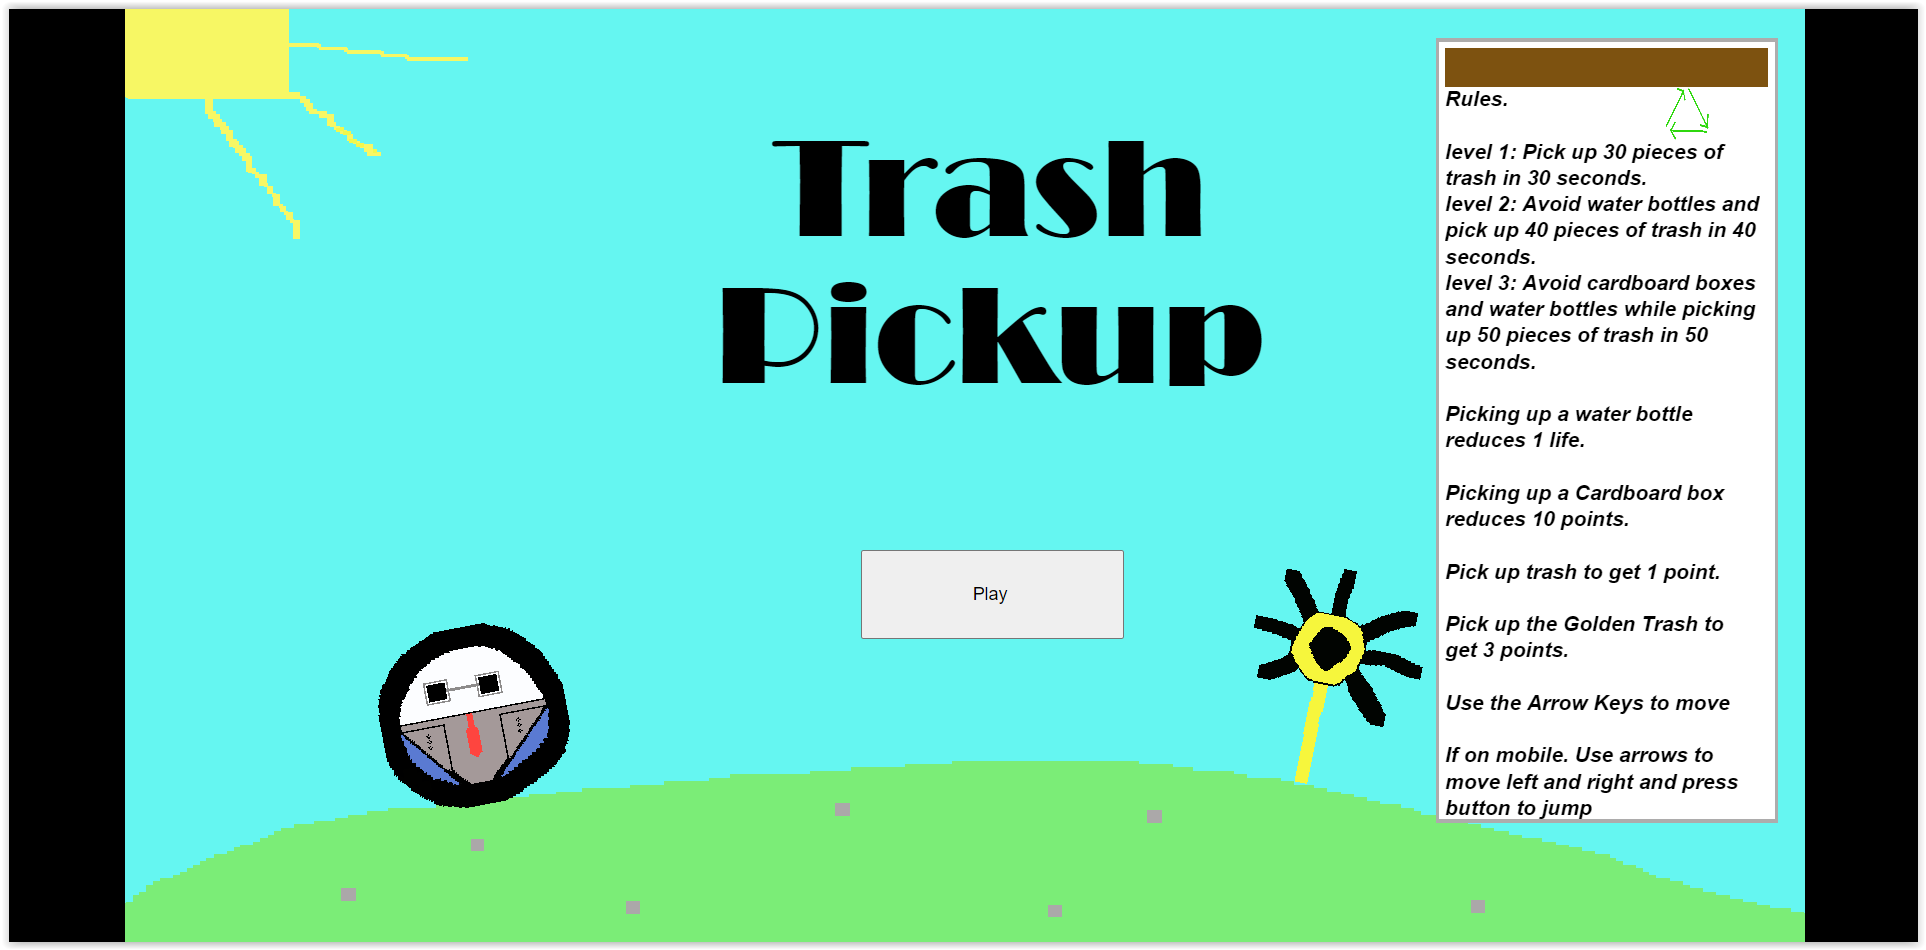 Trash Pickup